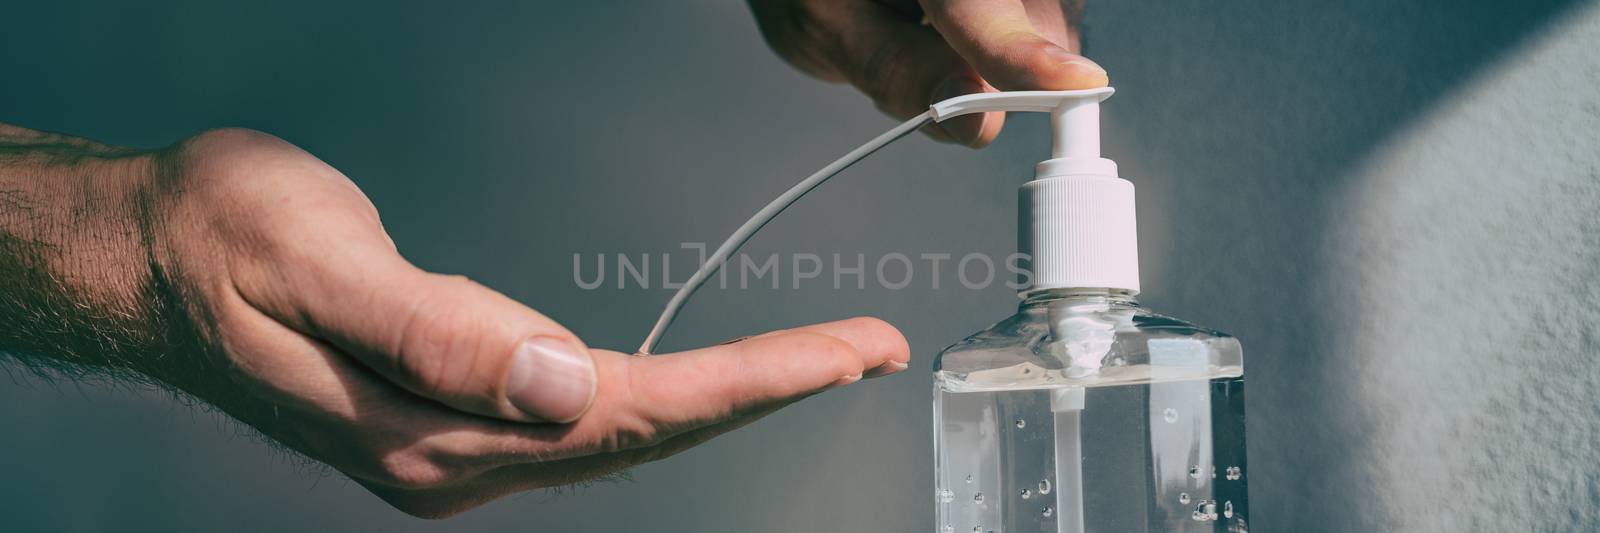 Hand sanitizer alcohol gel rub cleaning hands for hygiene prevention of coronavirus virus pandemic banner panoramic header.